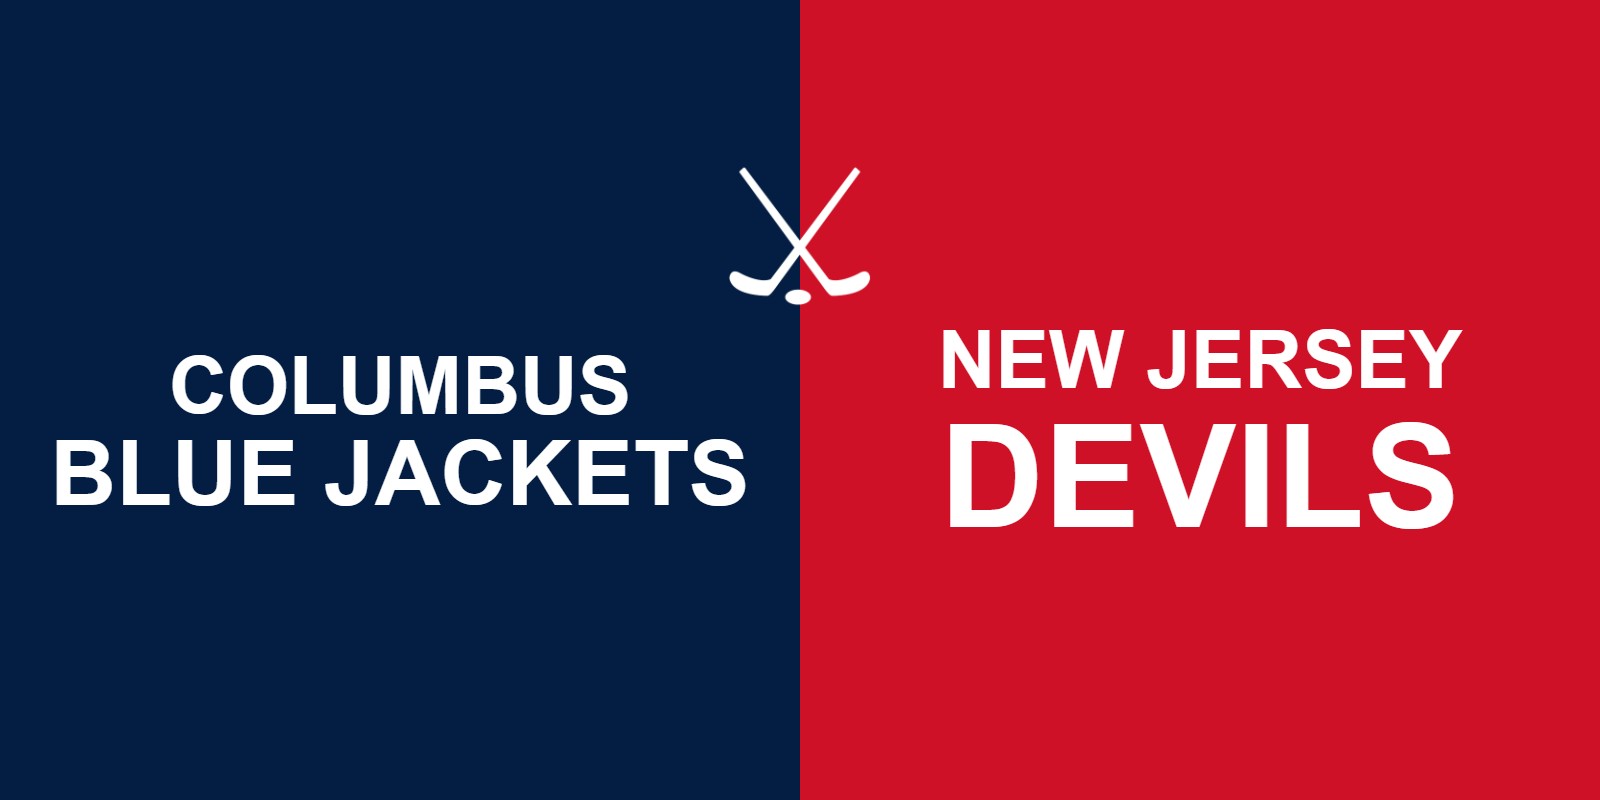 Blue Jackets vs Devils